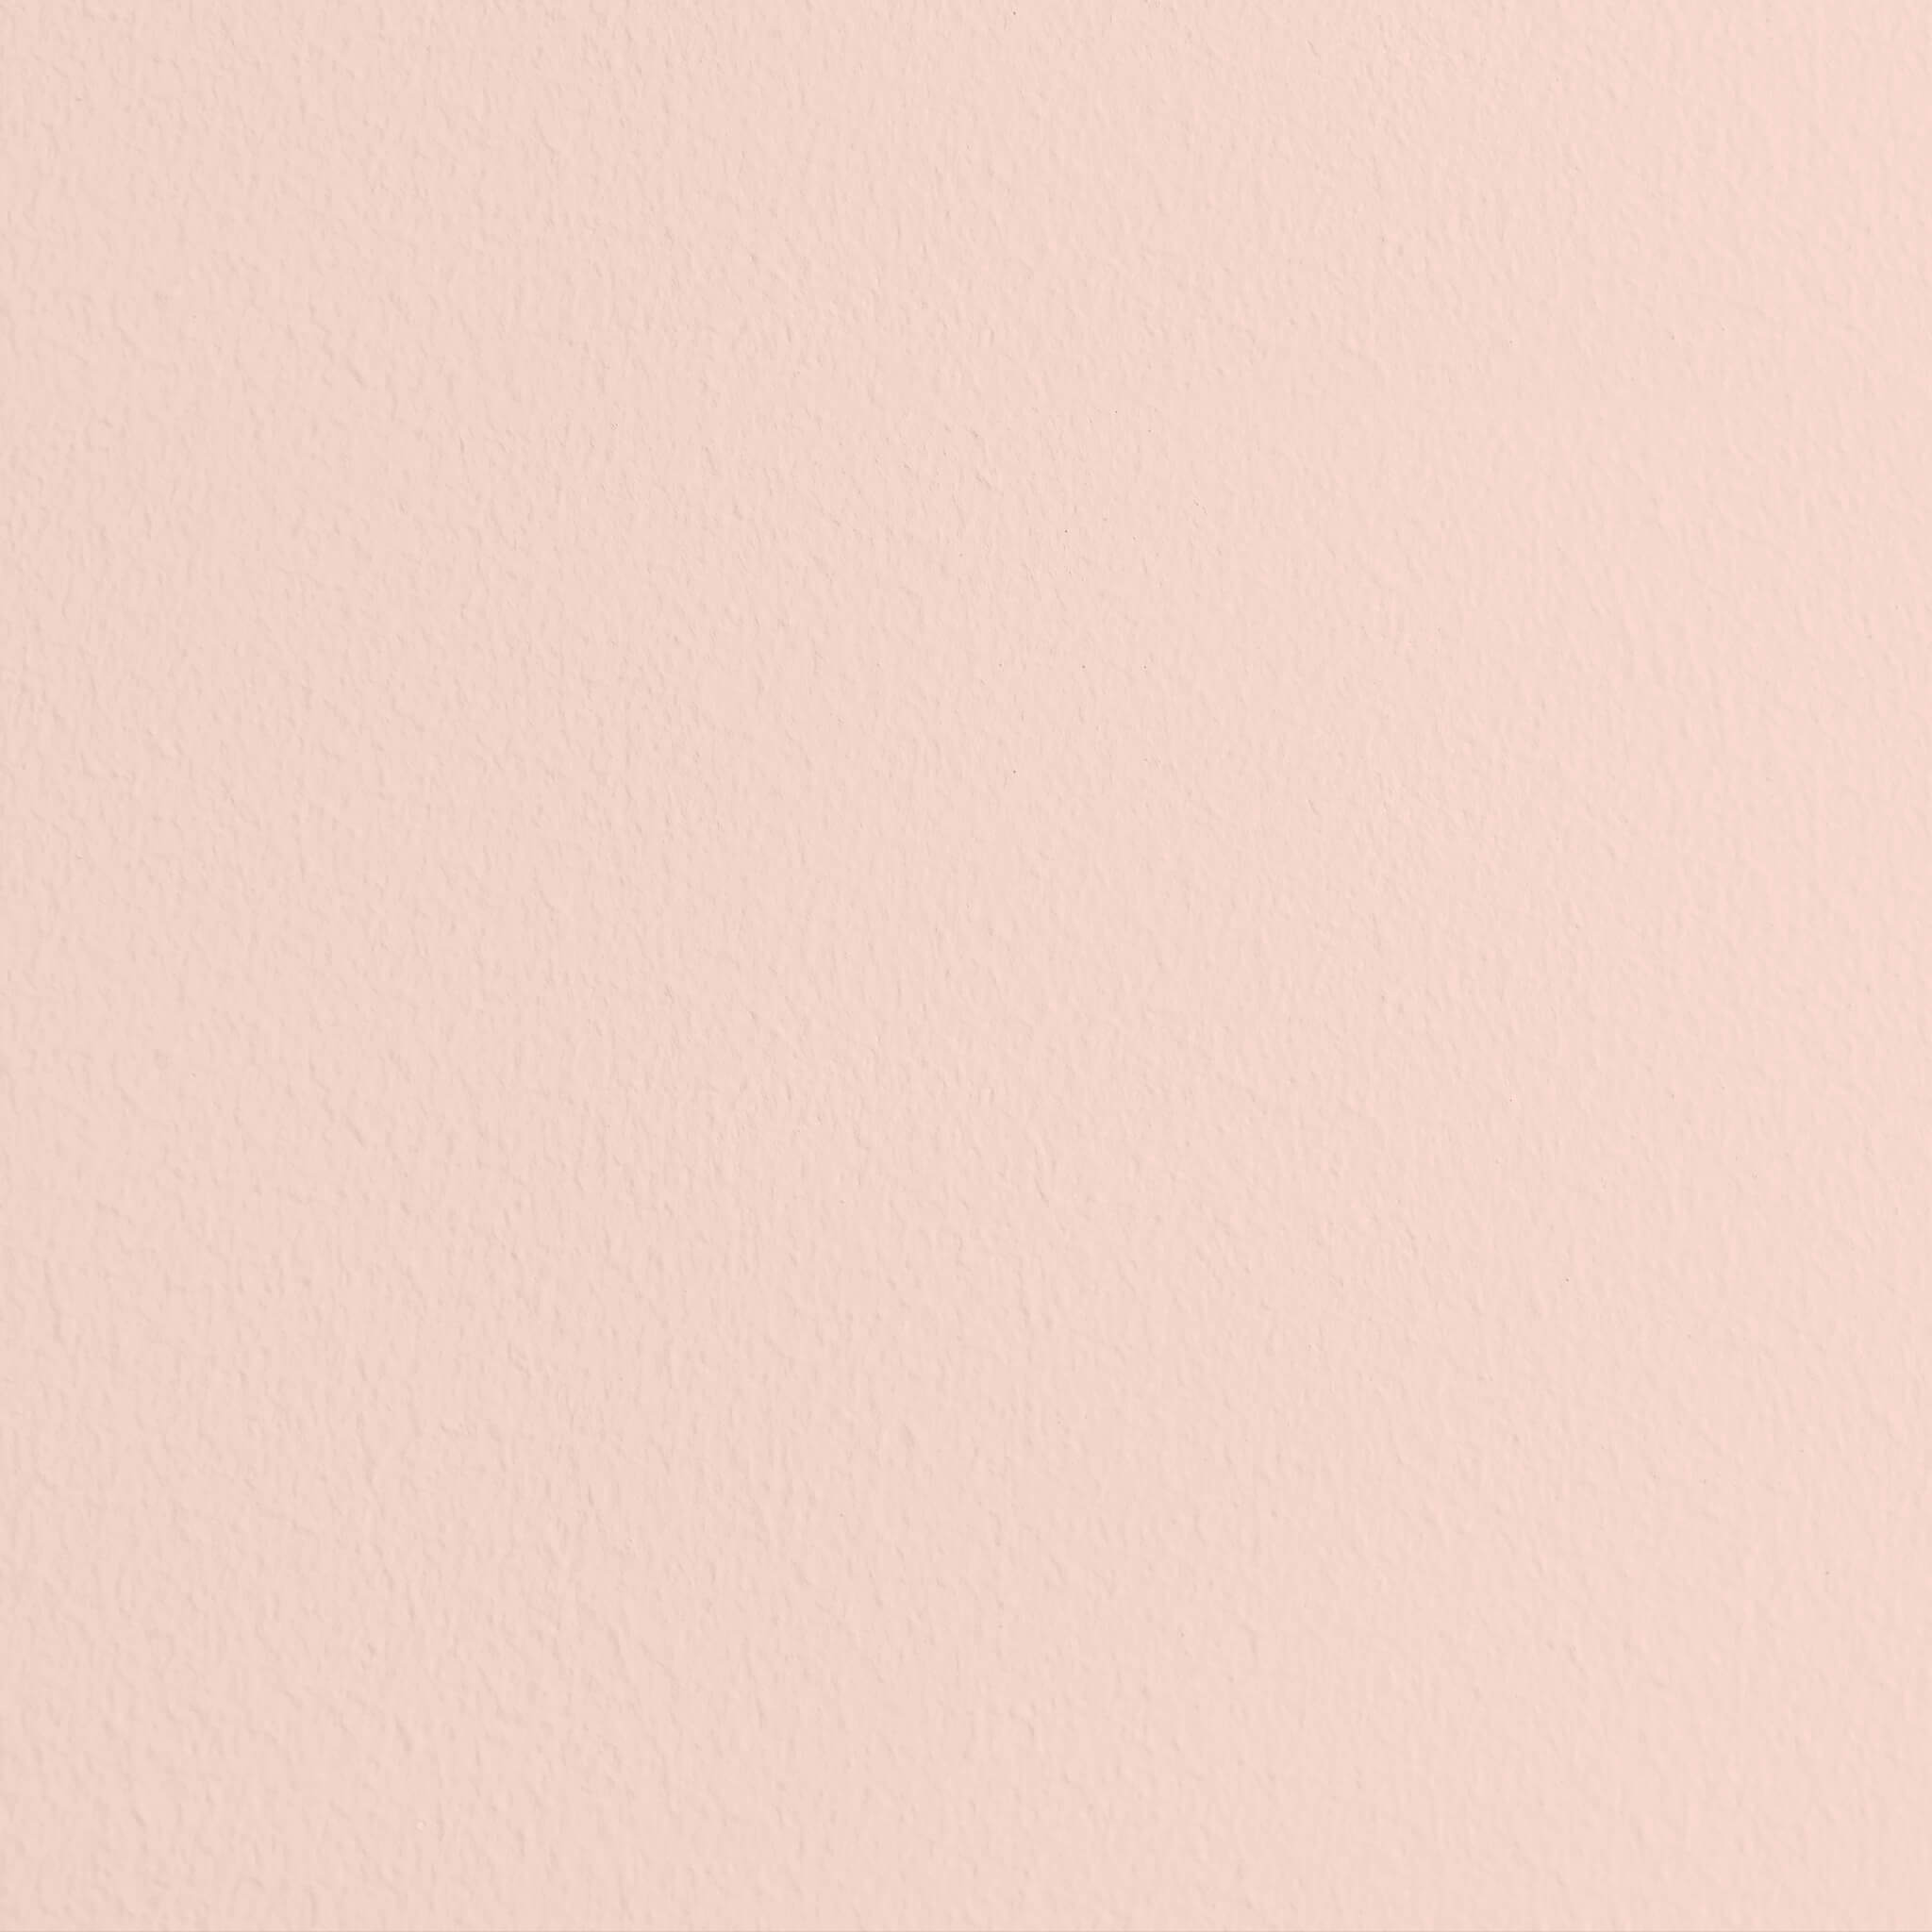 Mylands Palmerston Pink No. 243 - Marble Matt Emulsion / Wandfarbe, 1L